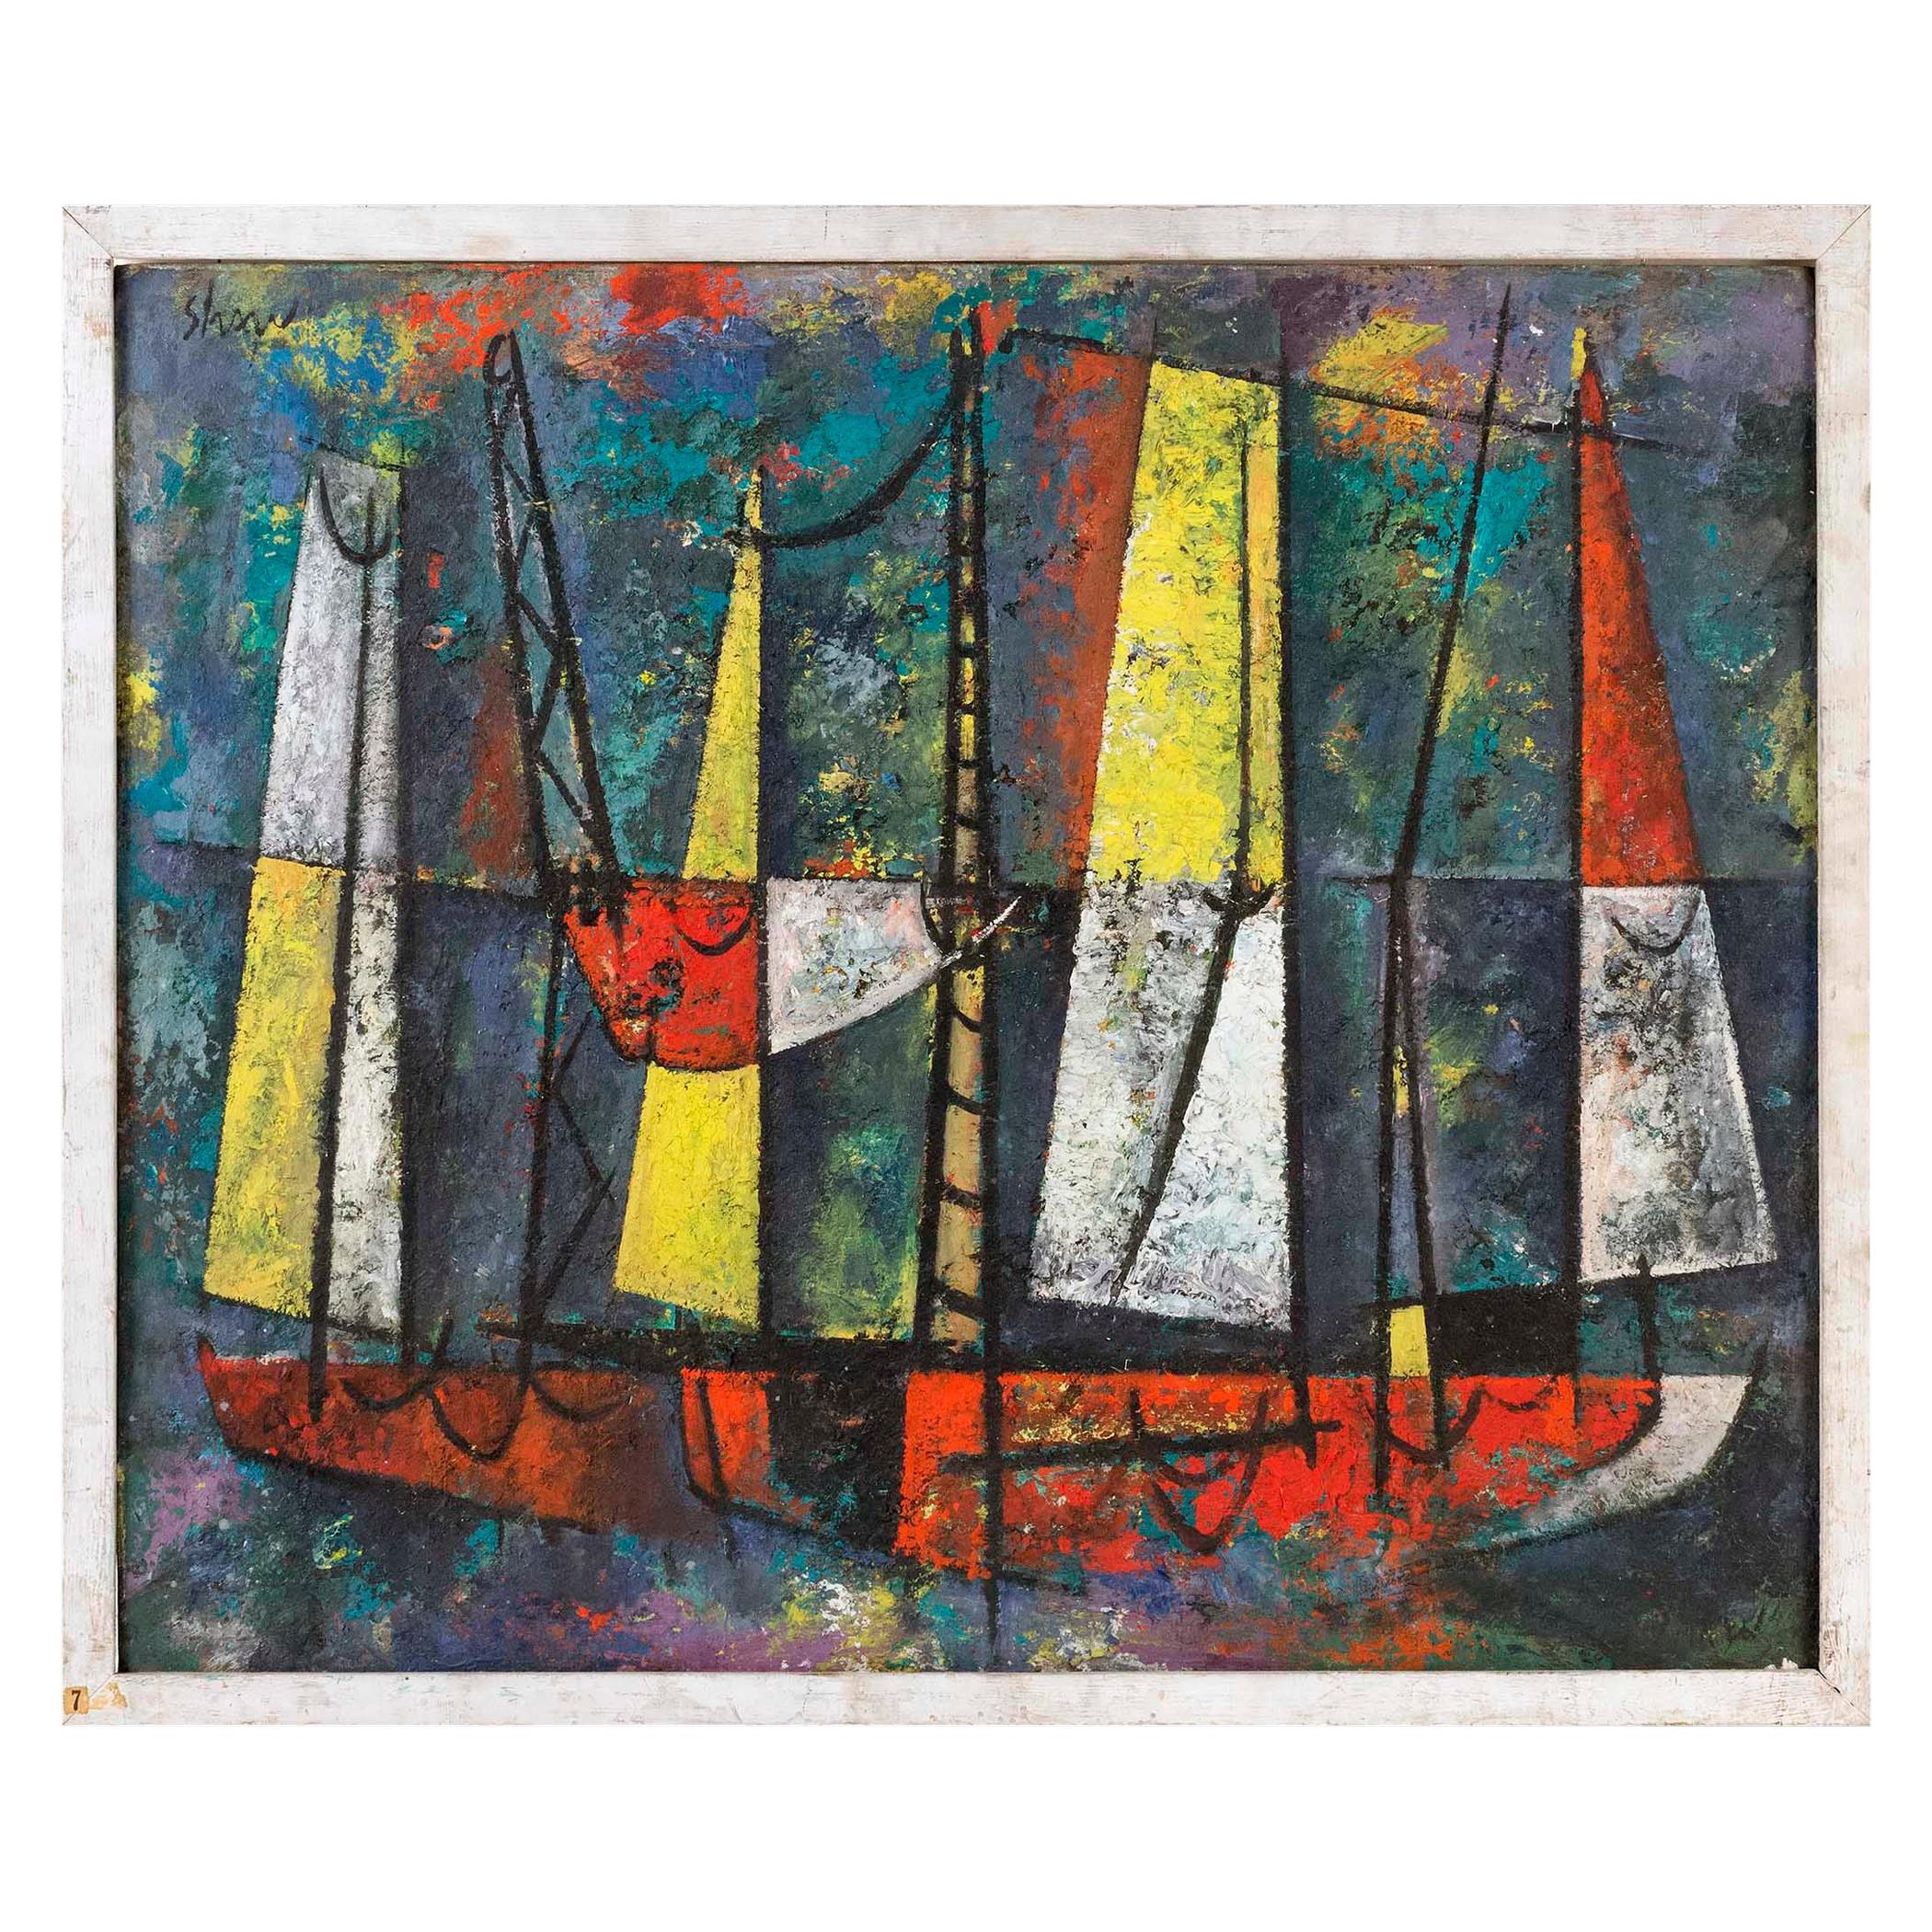 Fishing Fleet by Charles Green Shaw